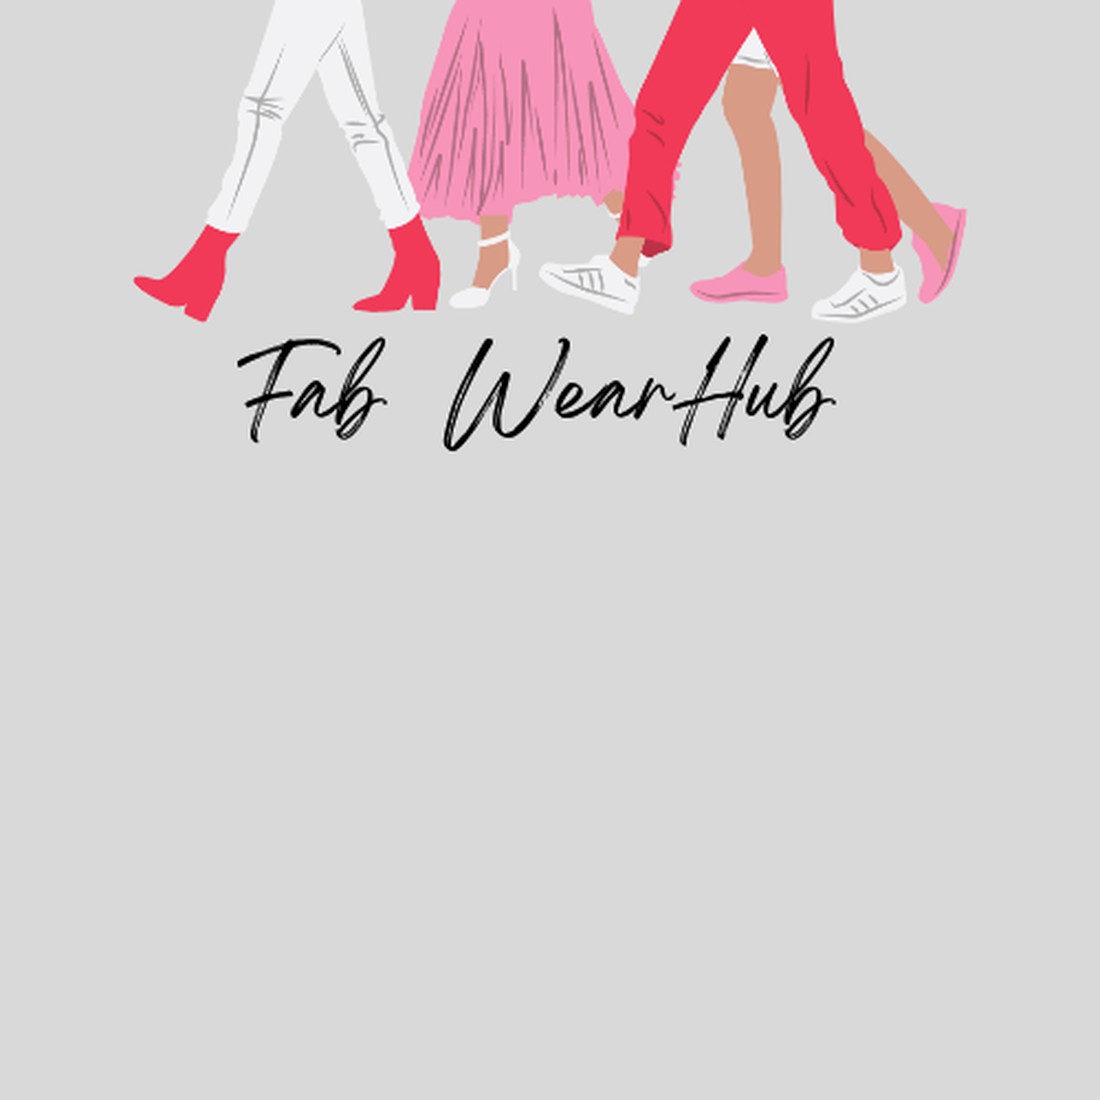 Fab Wear Hub Design cover image.